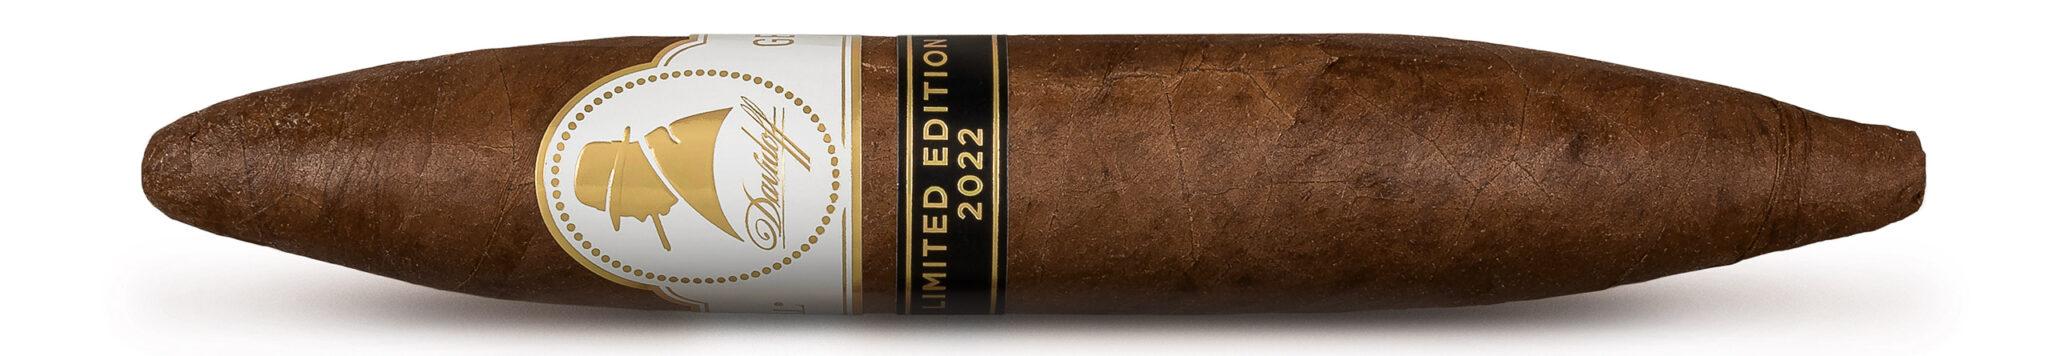 Сигара №2 2022 года по версии Cigarjournal — DAVIDOFF WINSTON CHURCHILL LE 2022